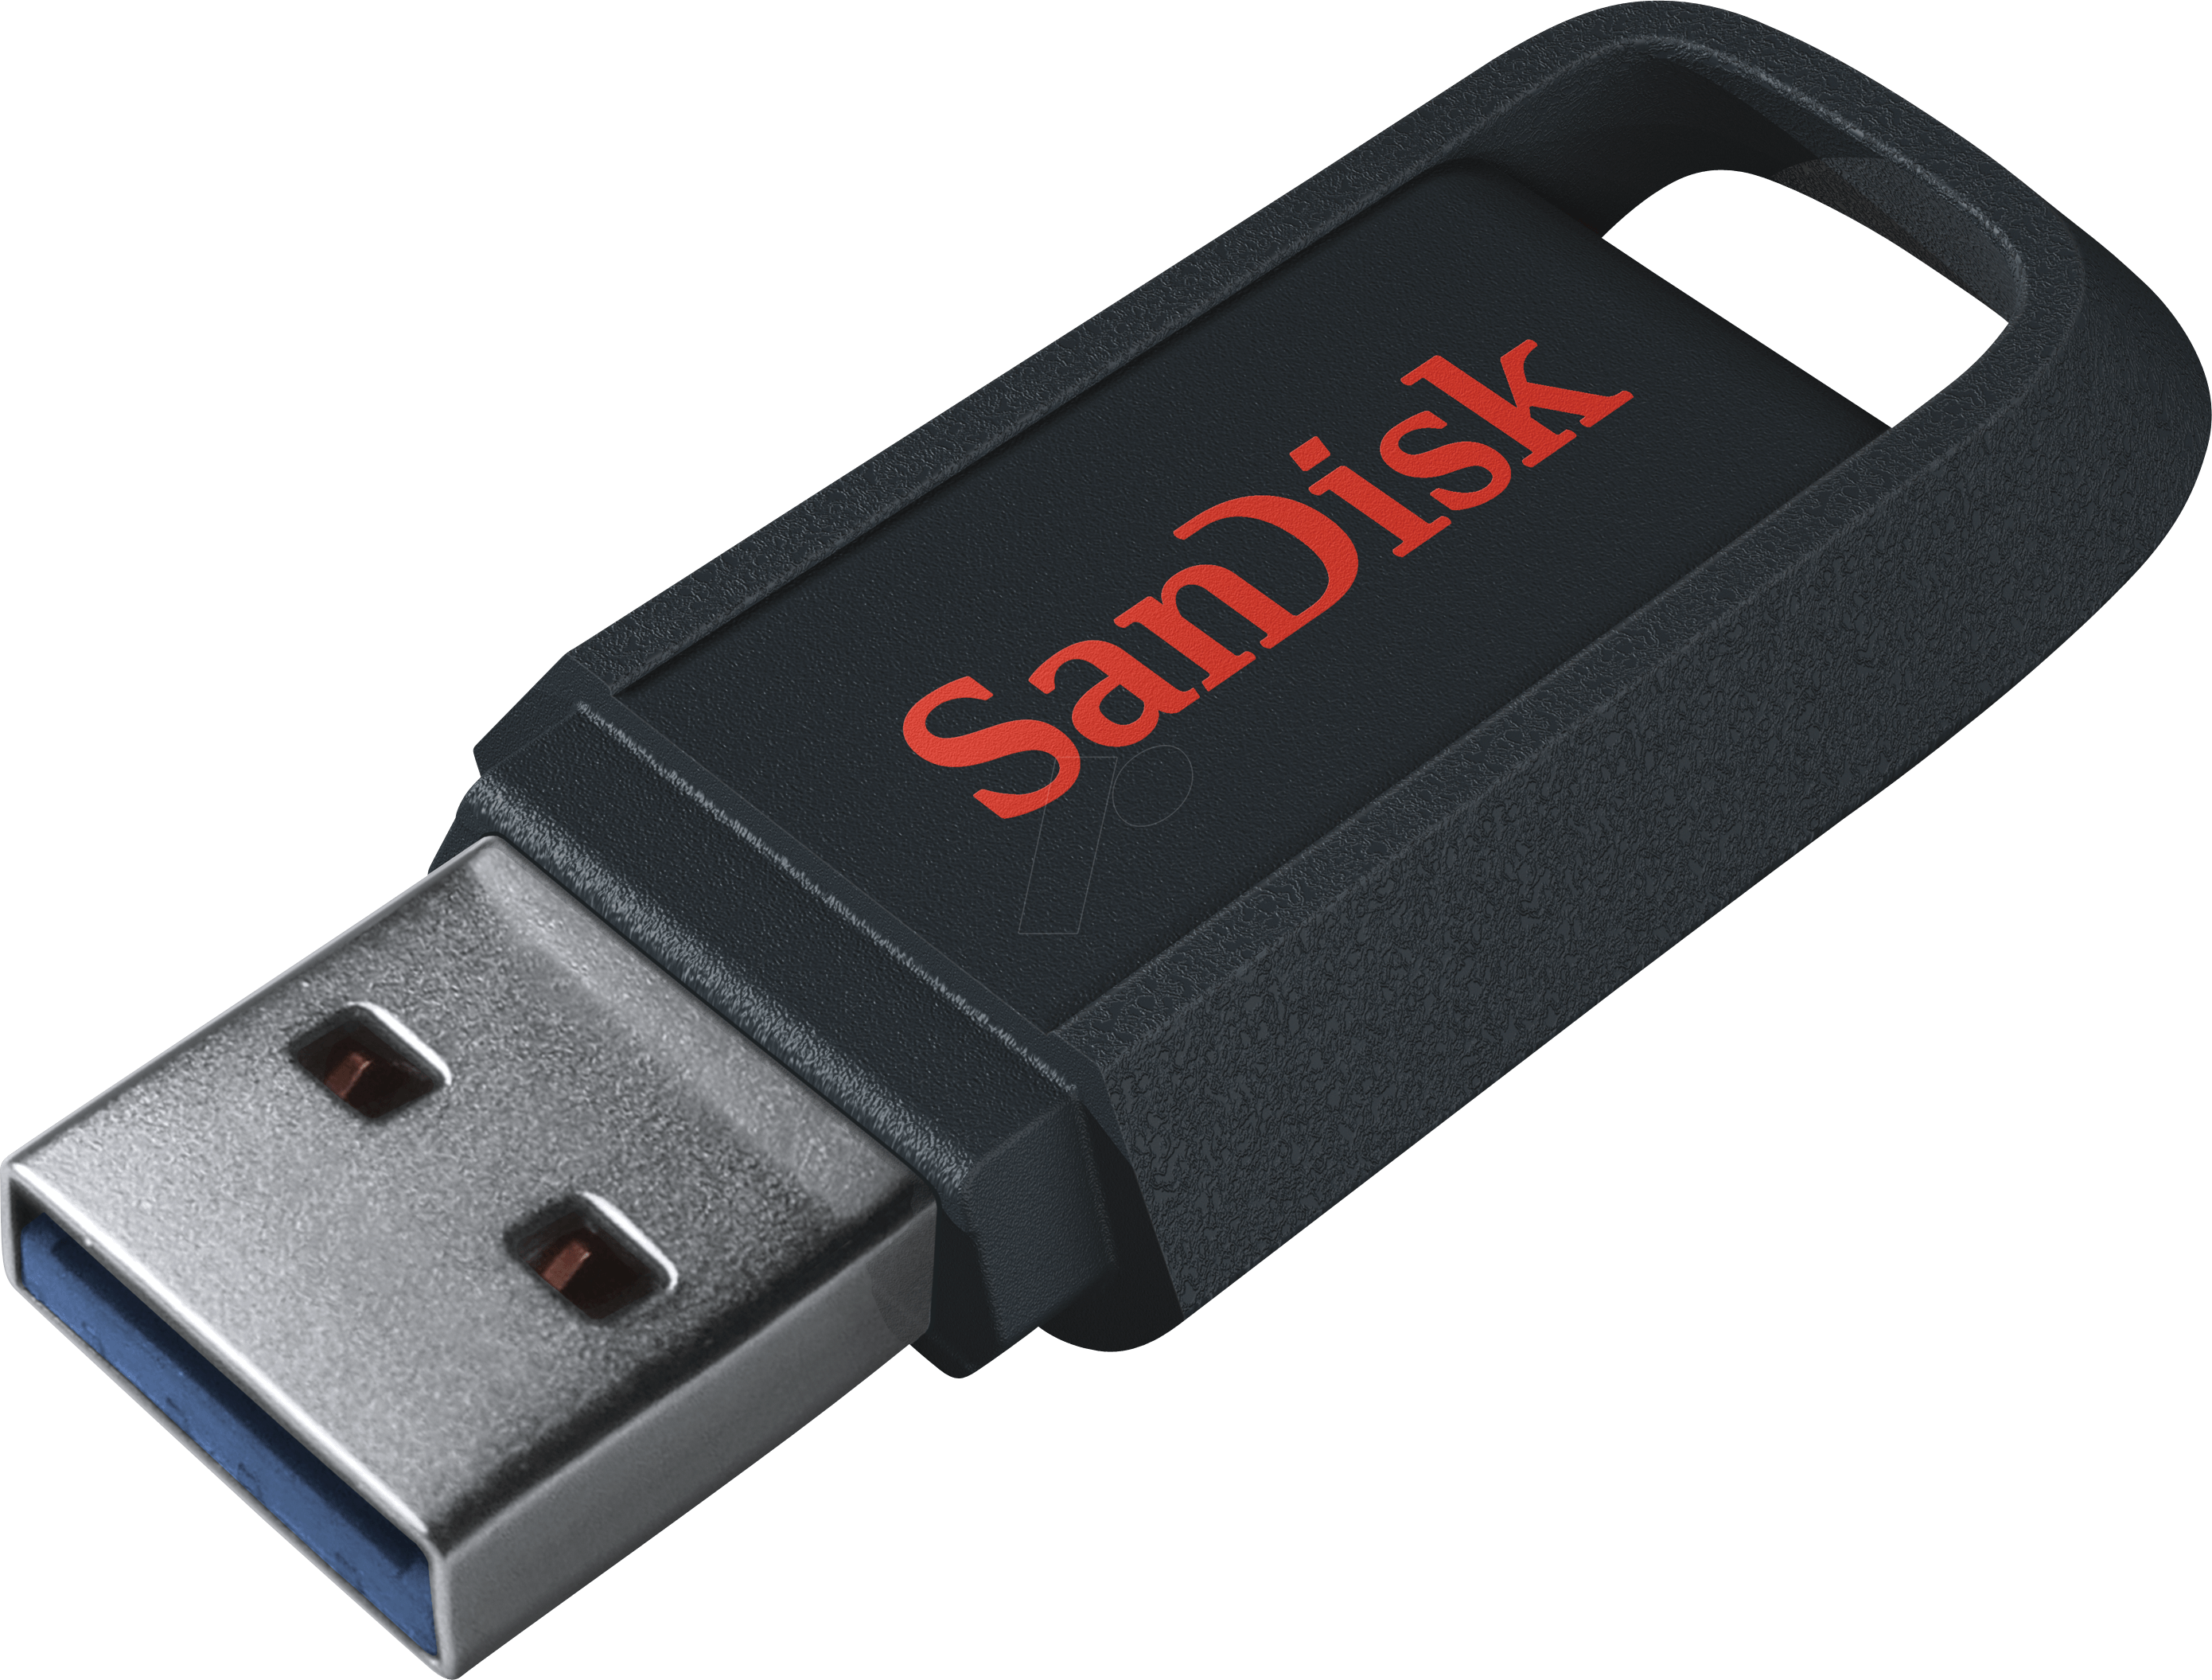 USB Stick (Grouped Product) – KR Web Services